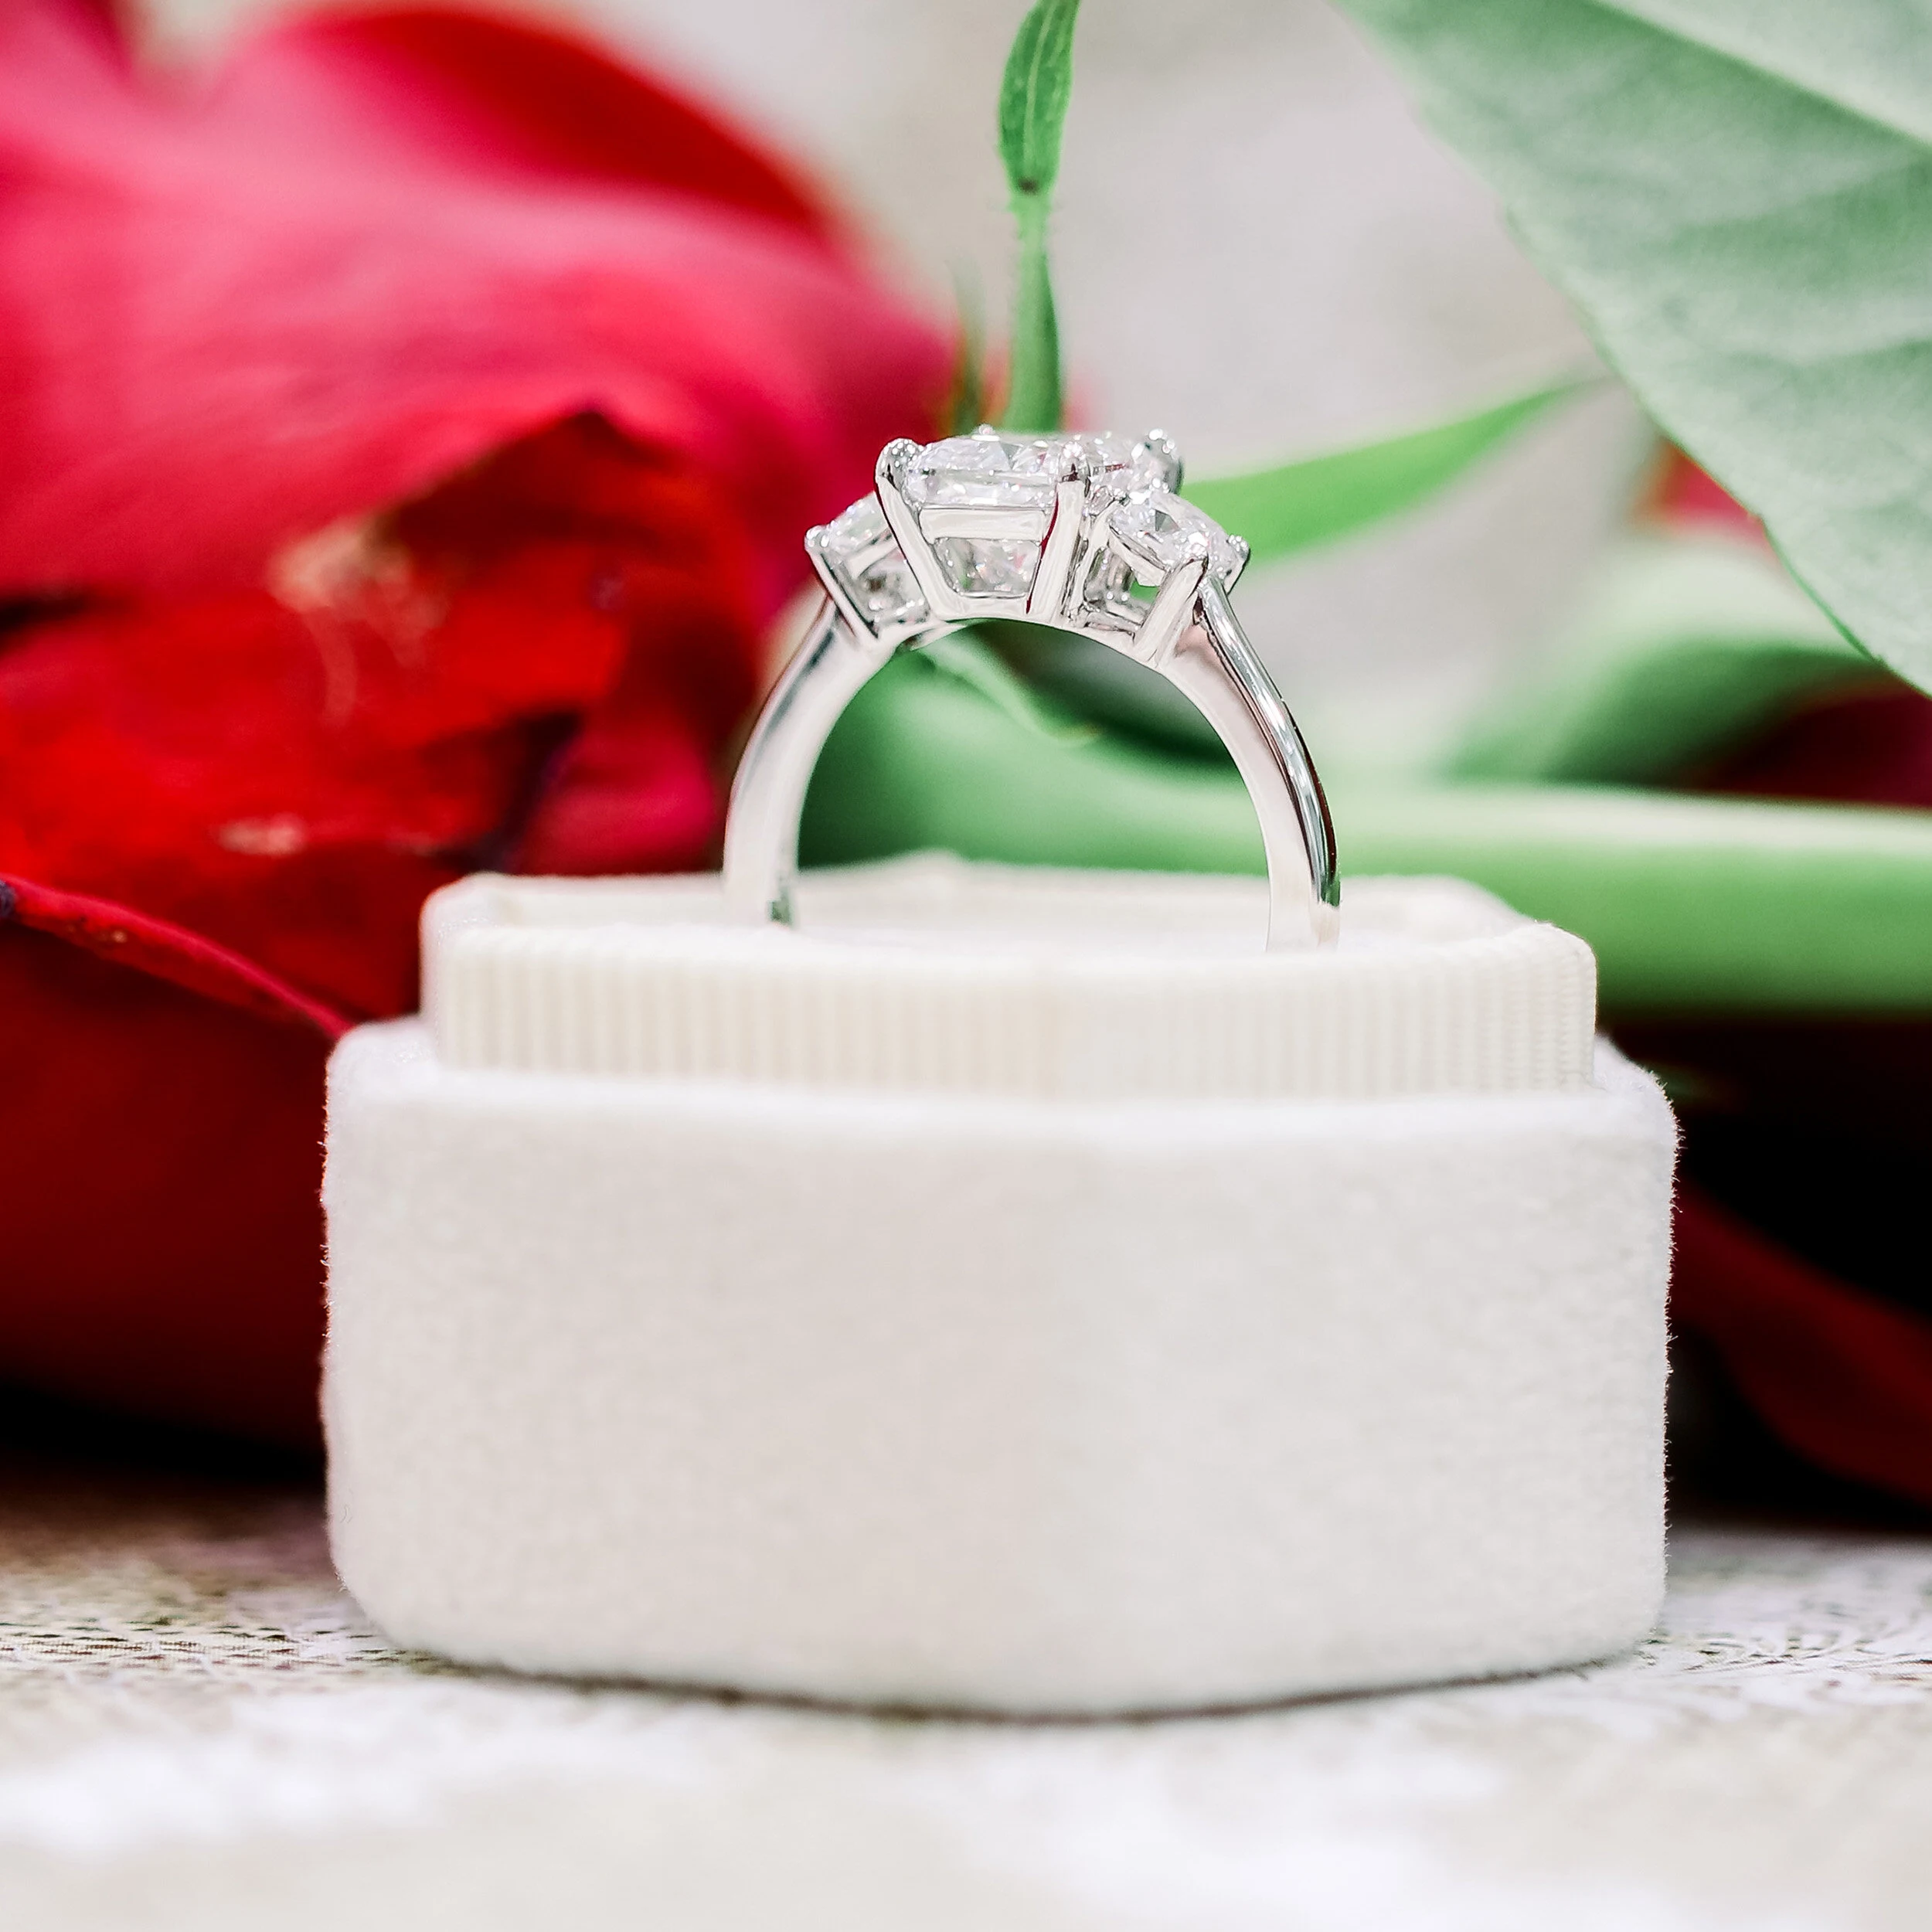 cushion three stone engagement ring with 1.5ct lab grown cushion cut diamond center stone and platinum setting